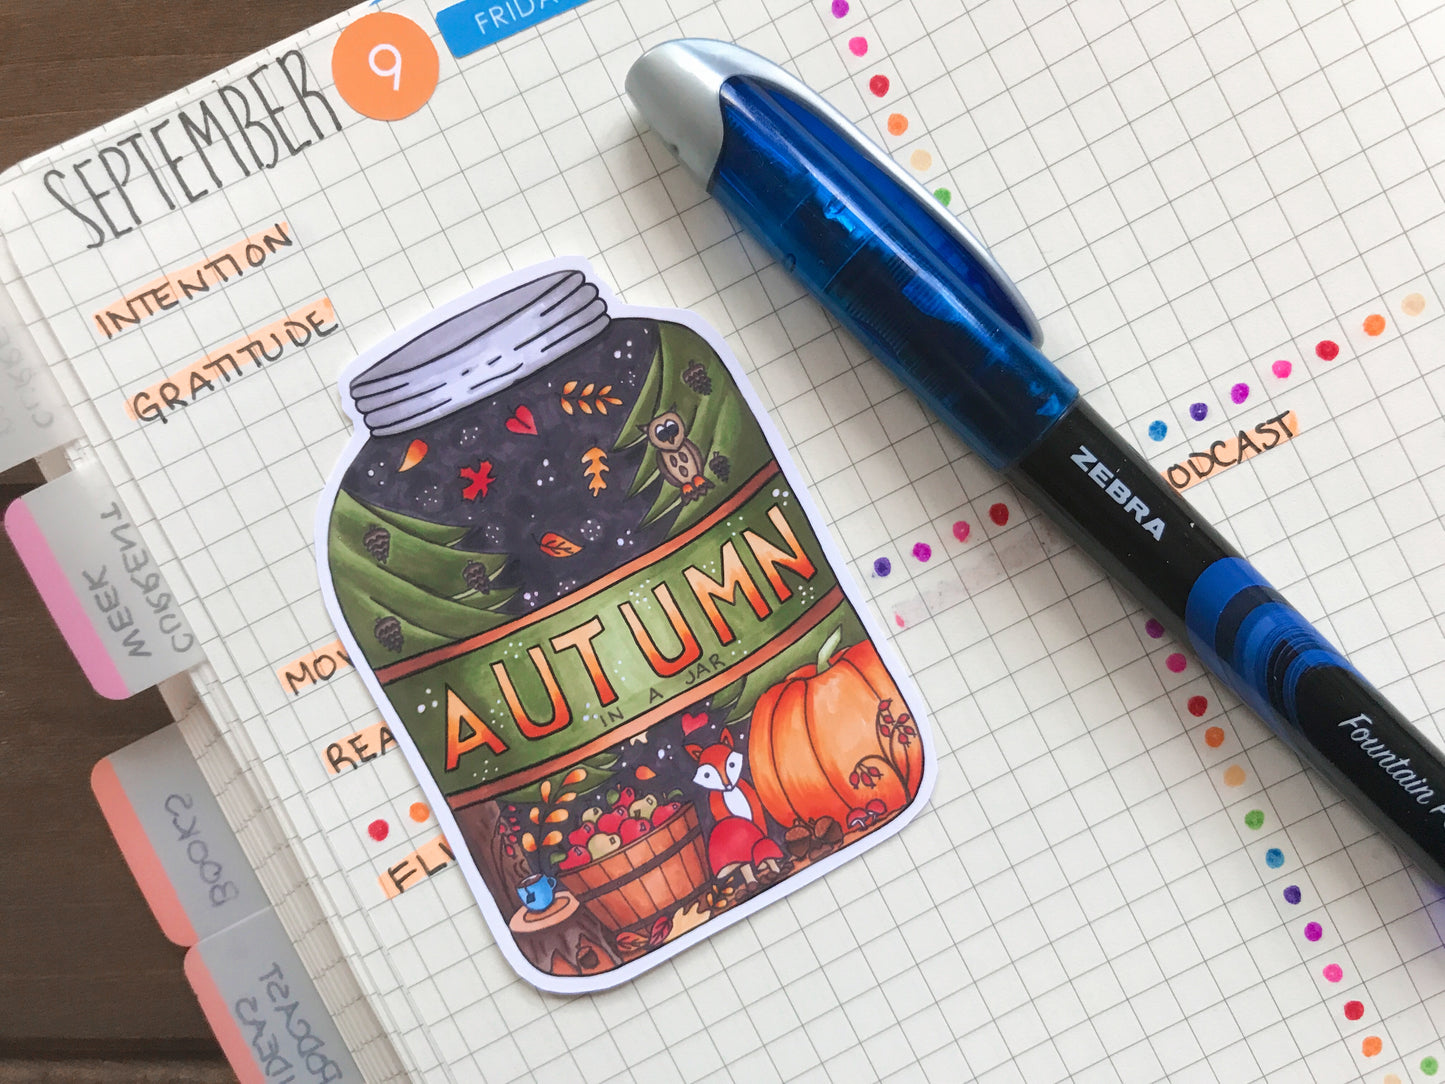 Autumn in a Jar Die Cut Sticker